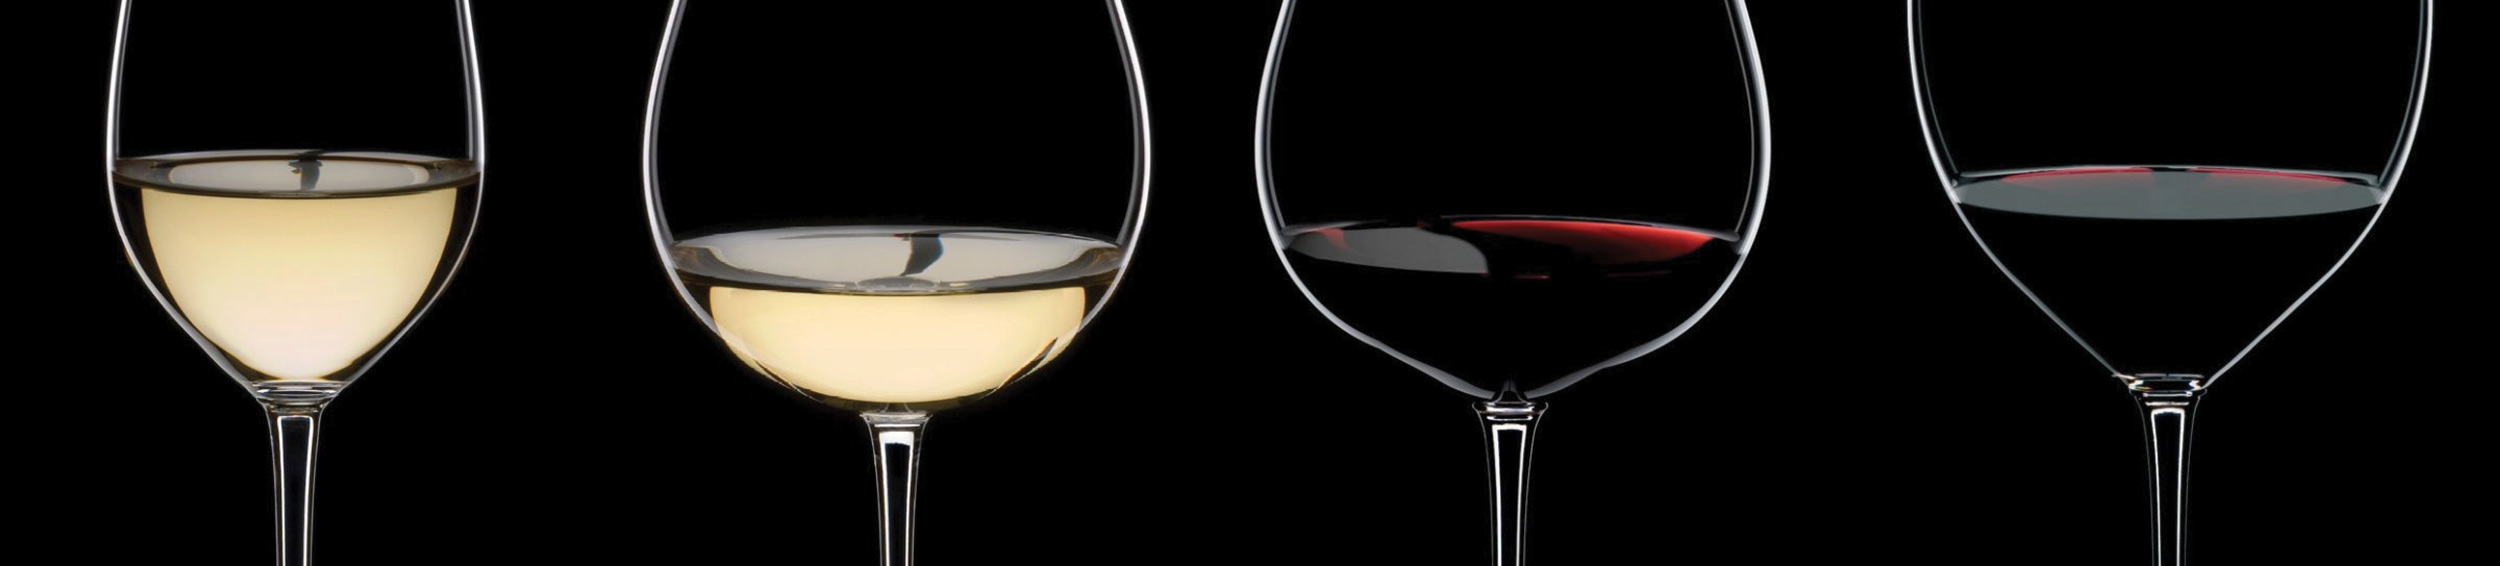 Vino Pinot Bianco Vial Linea Selezione Doc | Kaltern